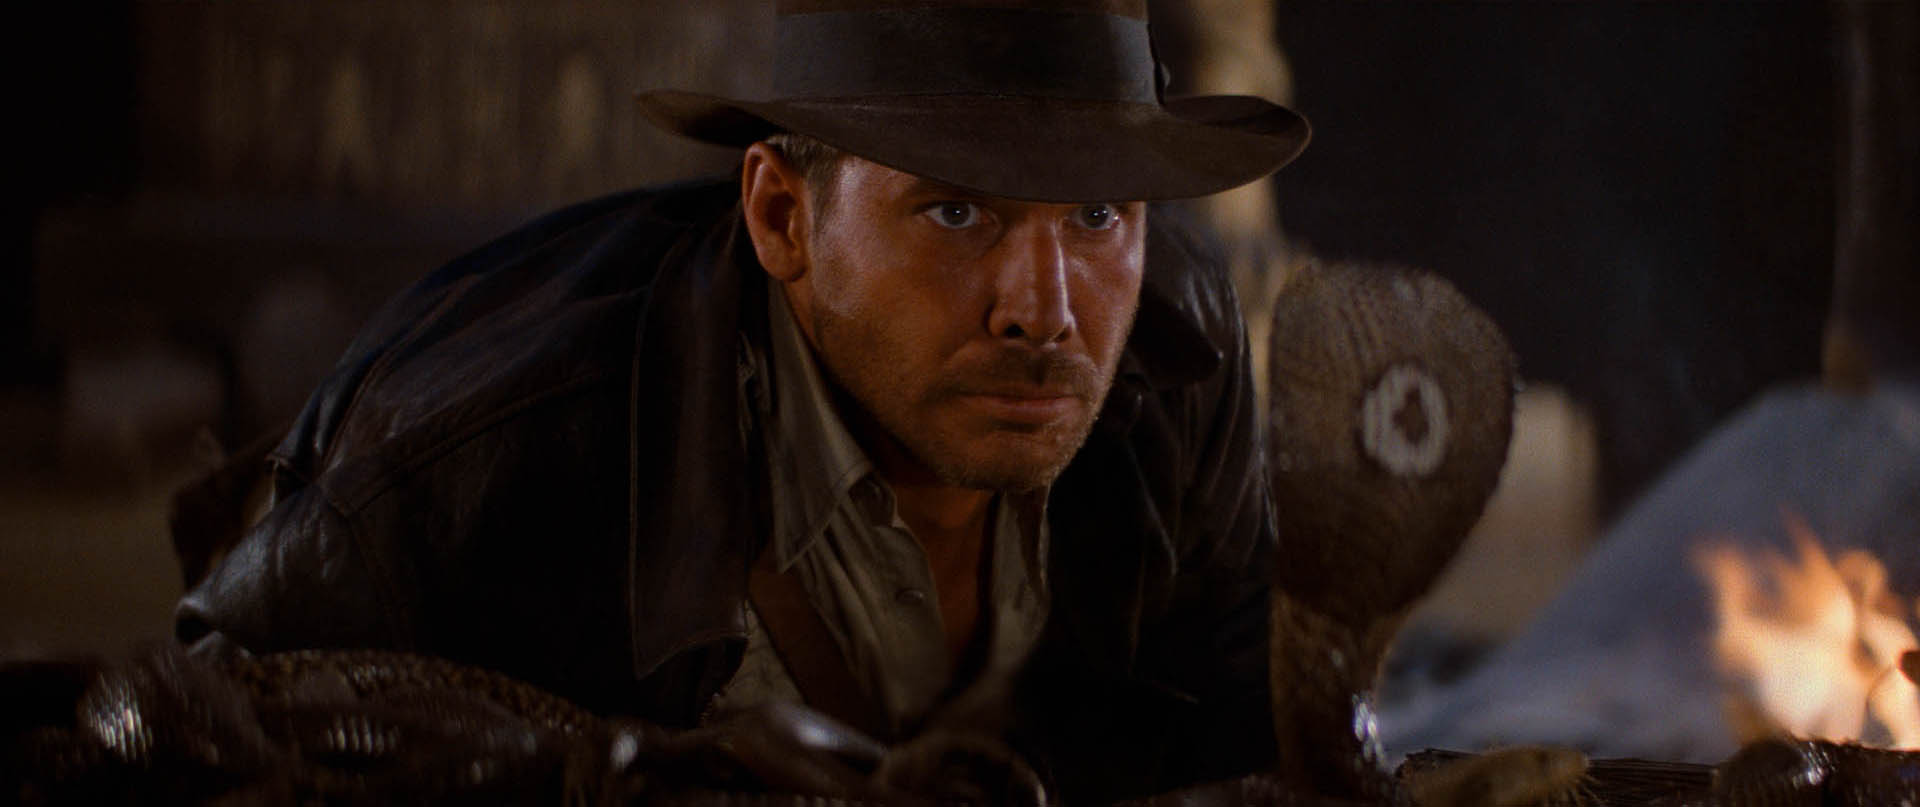 Indiana Jones looking at a snake